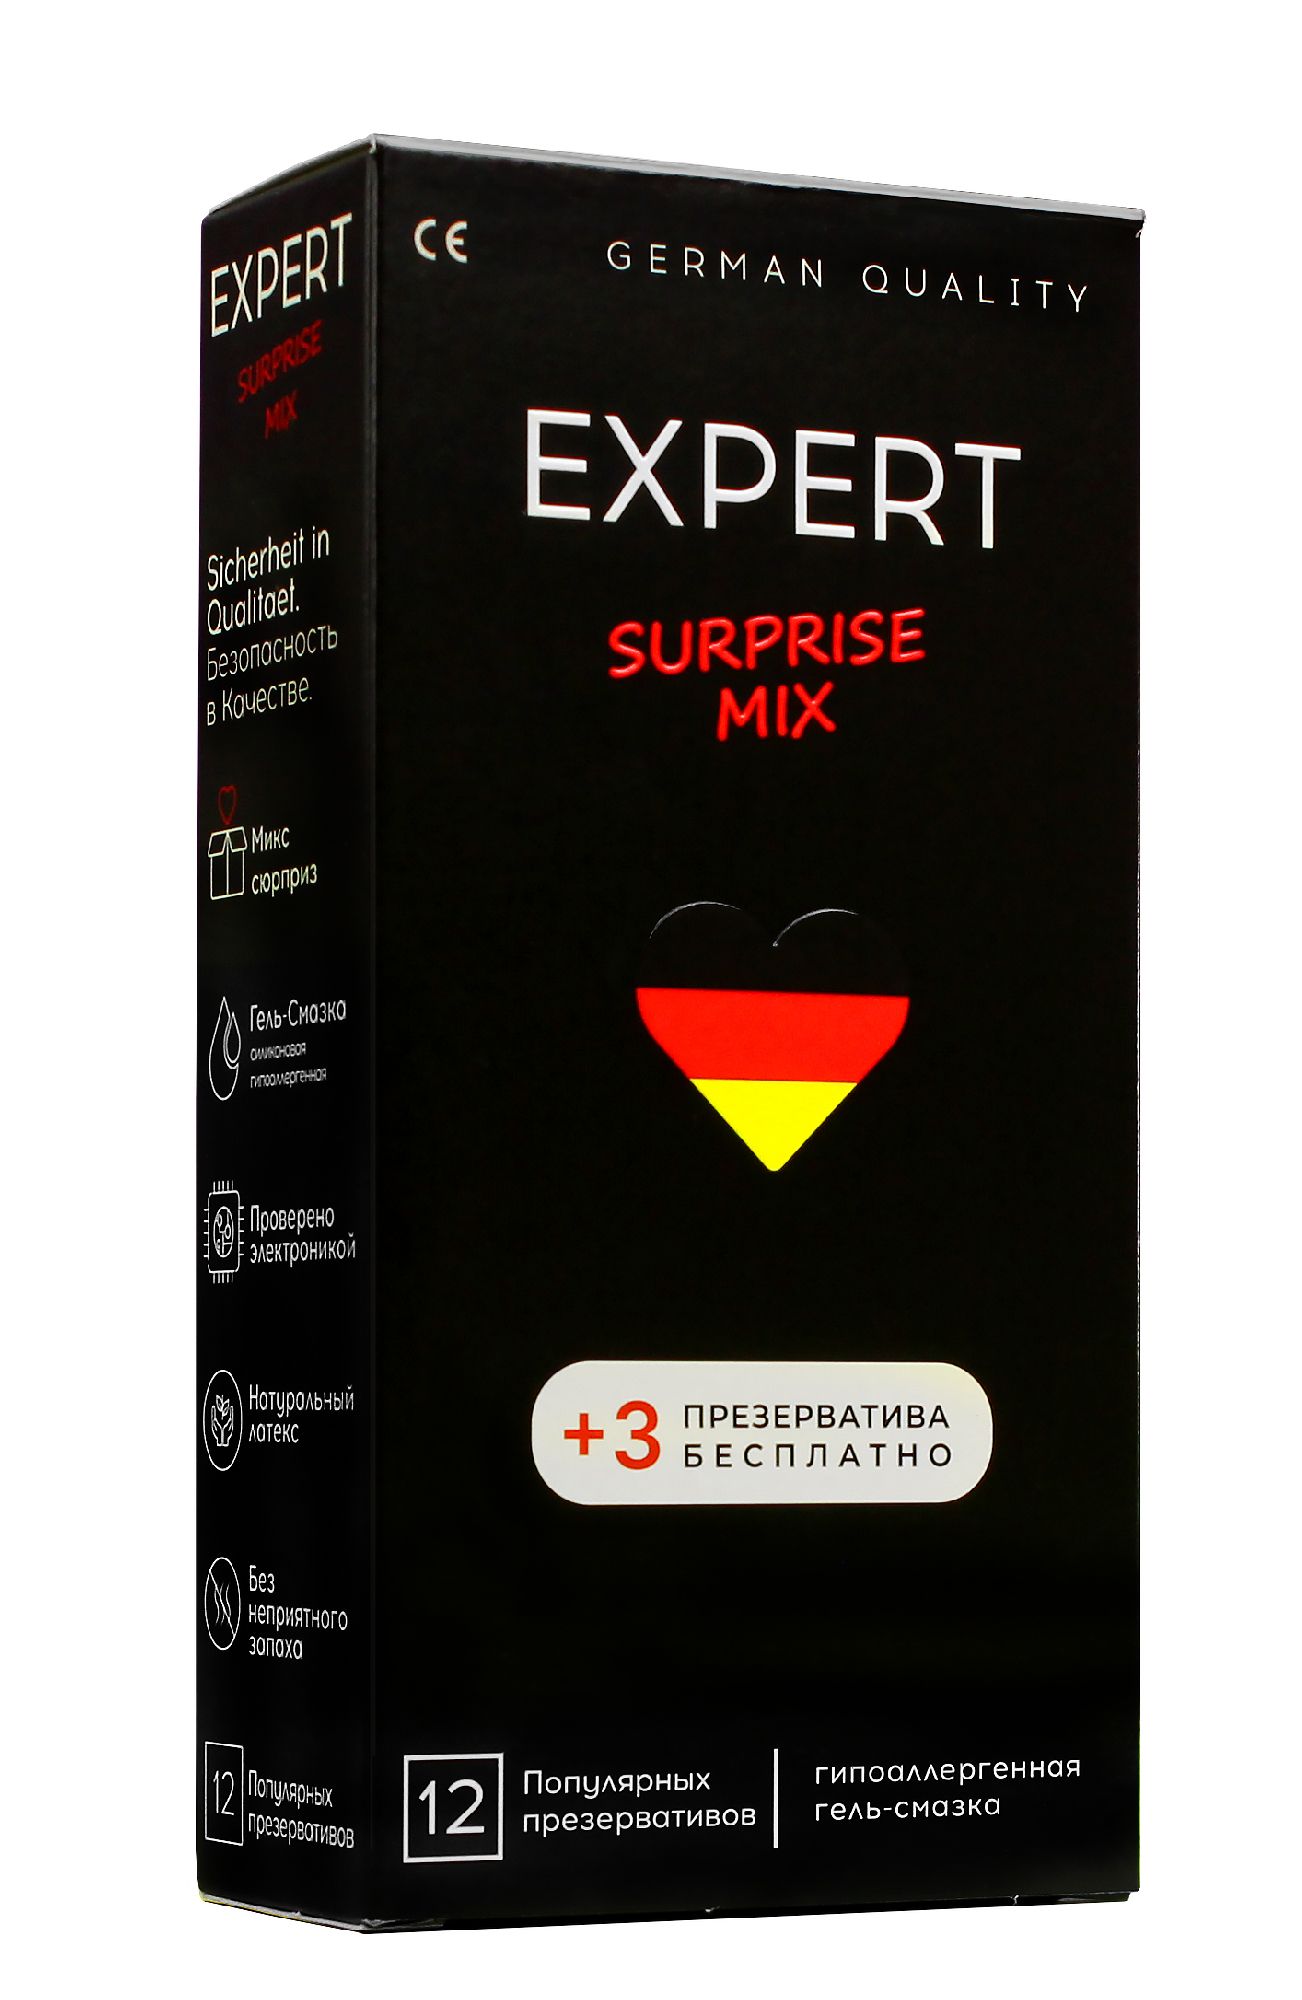  EXPERT SURPRISE MIX  12+3 (), 12+3 